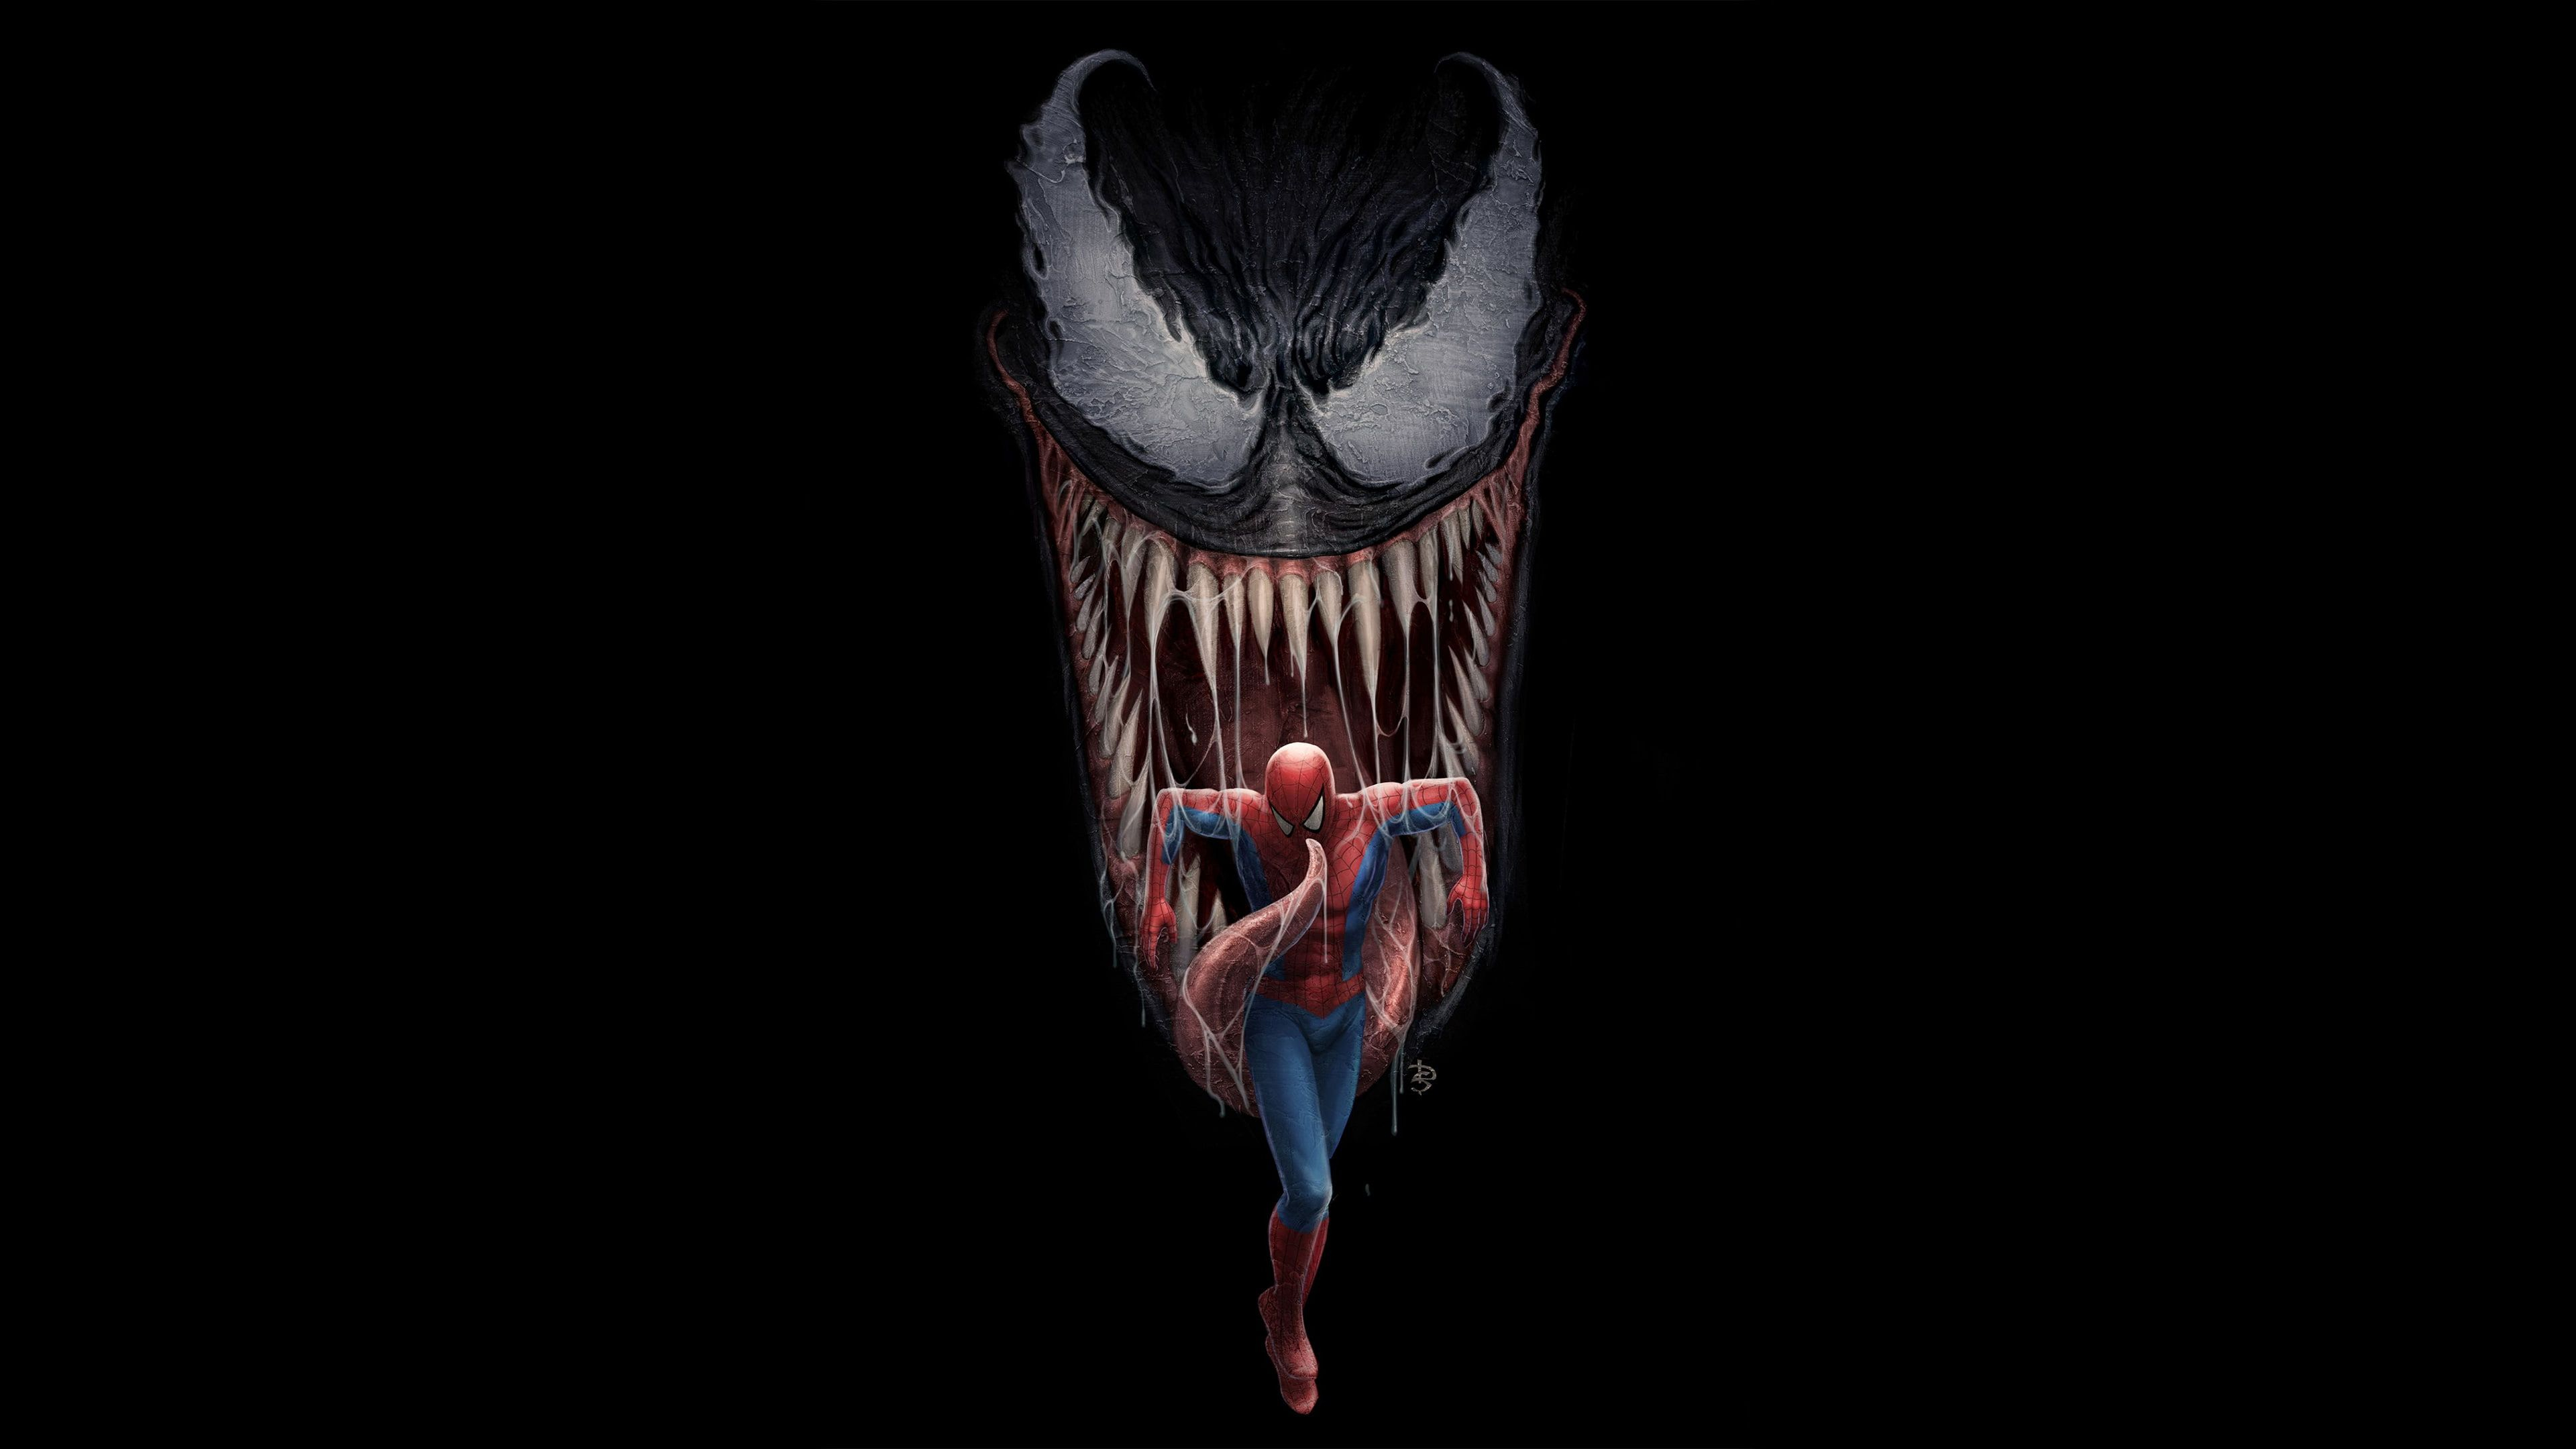 3840x2160 spiderman #venom #artwork #4k #hd digital art #superheroes #supervillain #4K #wallpaper #hdwallpaper #desktop | Marvel wallpaper, Deadpool wallpaper, Hd wallpaper